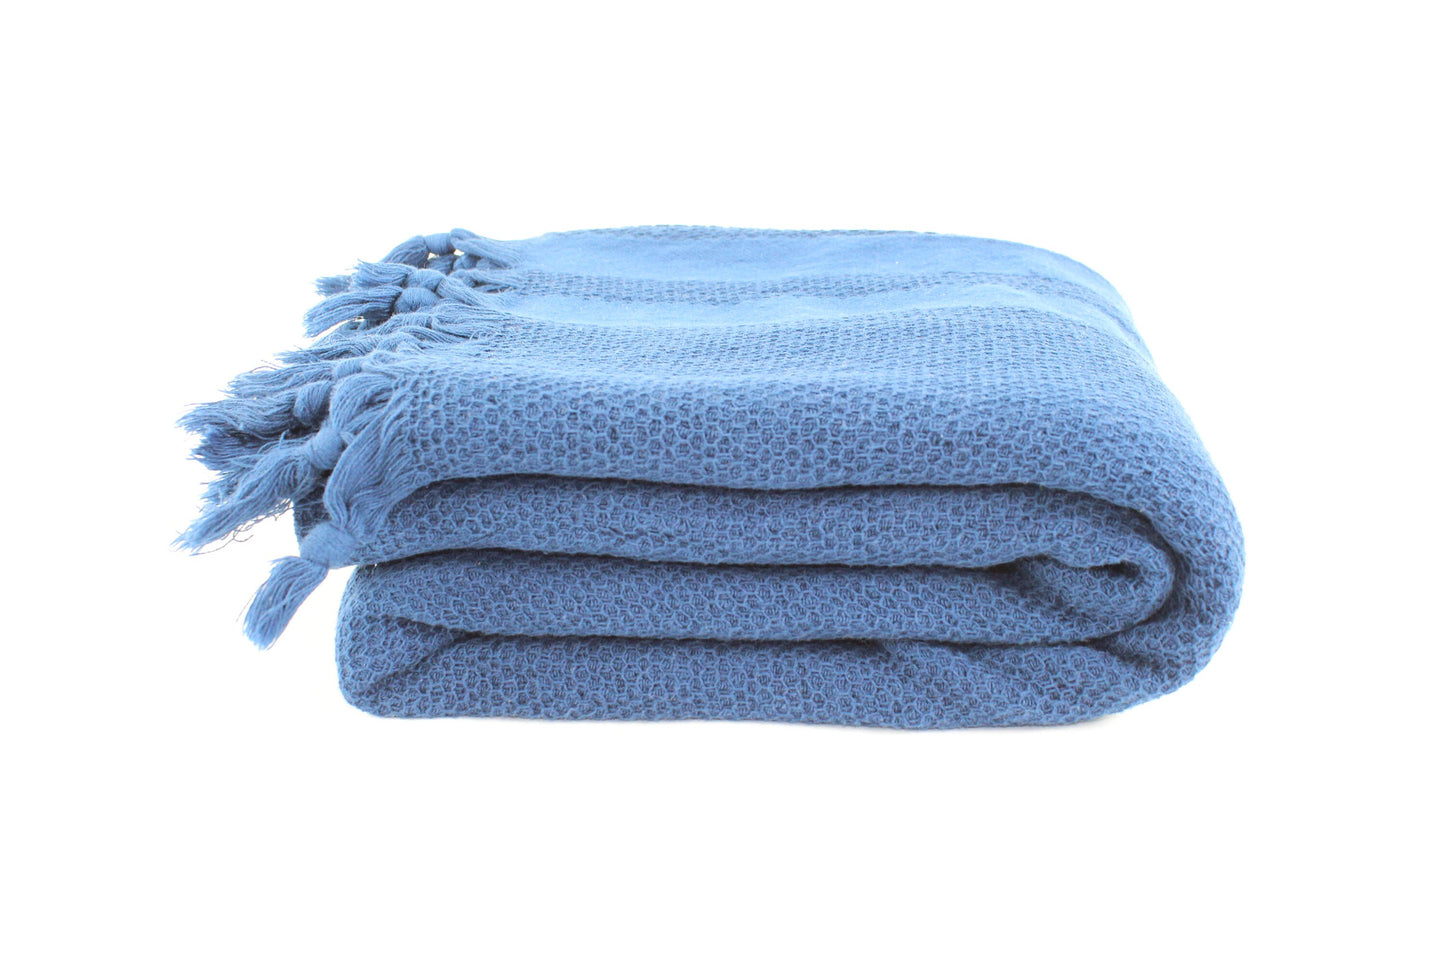 Premium Turkish Towel Peshtemal Fouta (Dark Navy Blue)